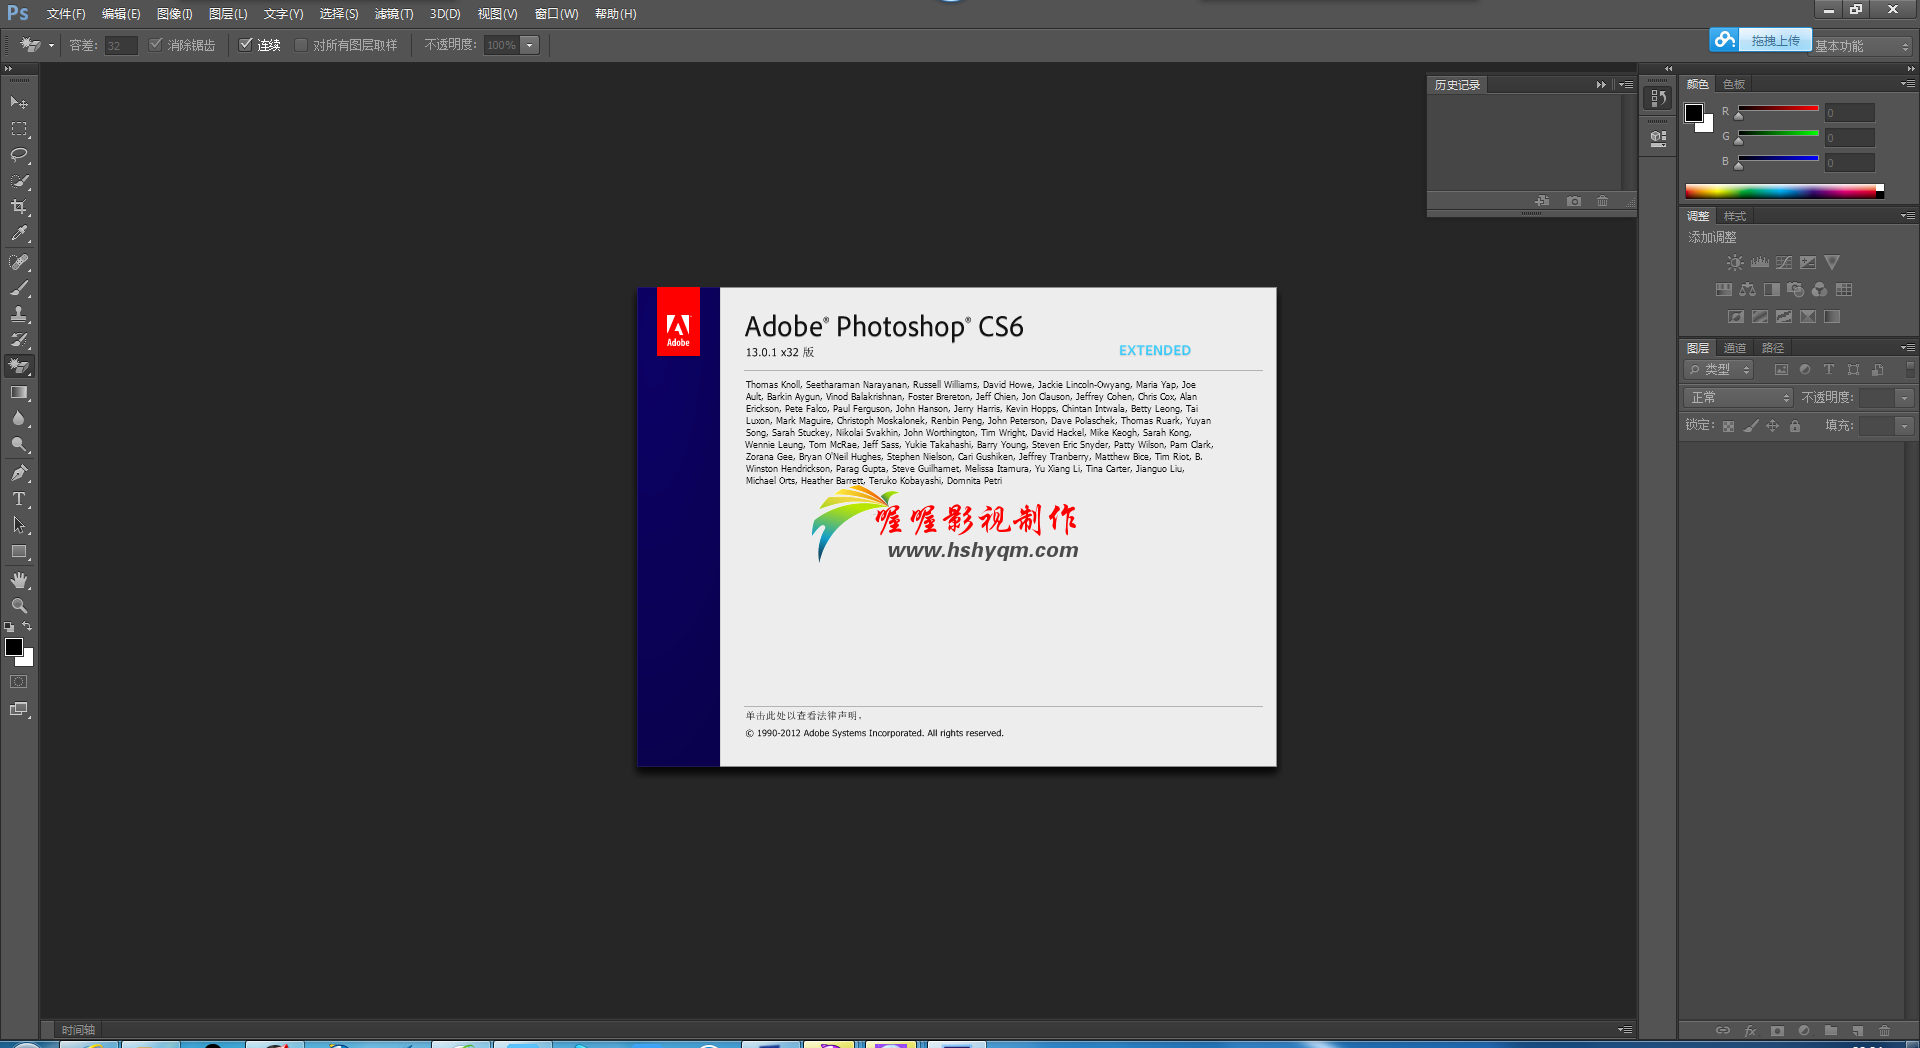 Adobe Photoshop CS6һװ